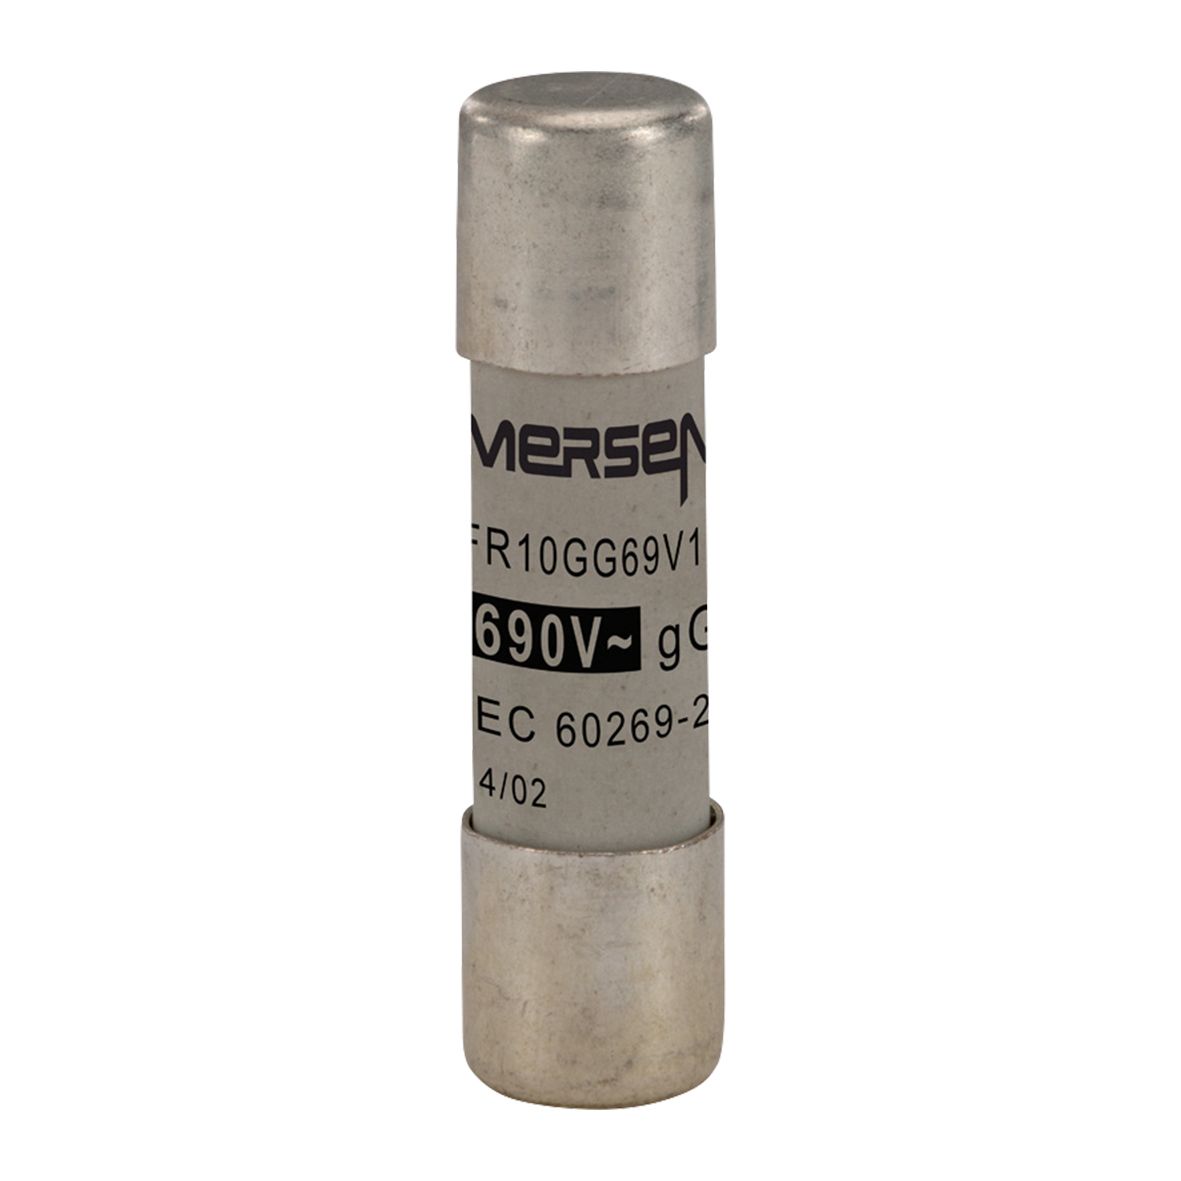 X302792 - Cylindrical fuse-link gG 690VAC 10.3x38, 10A